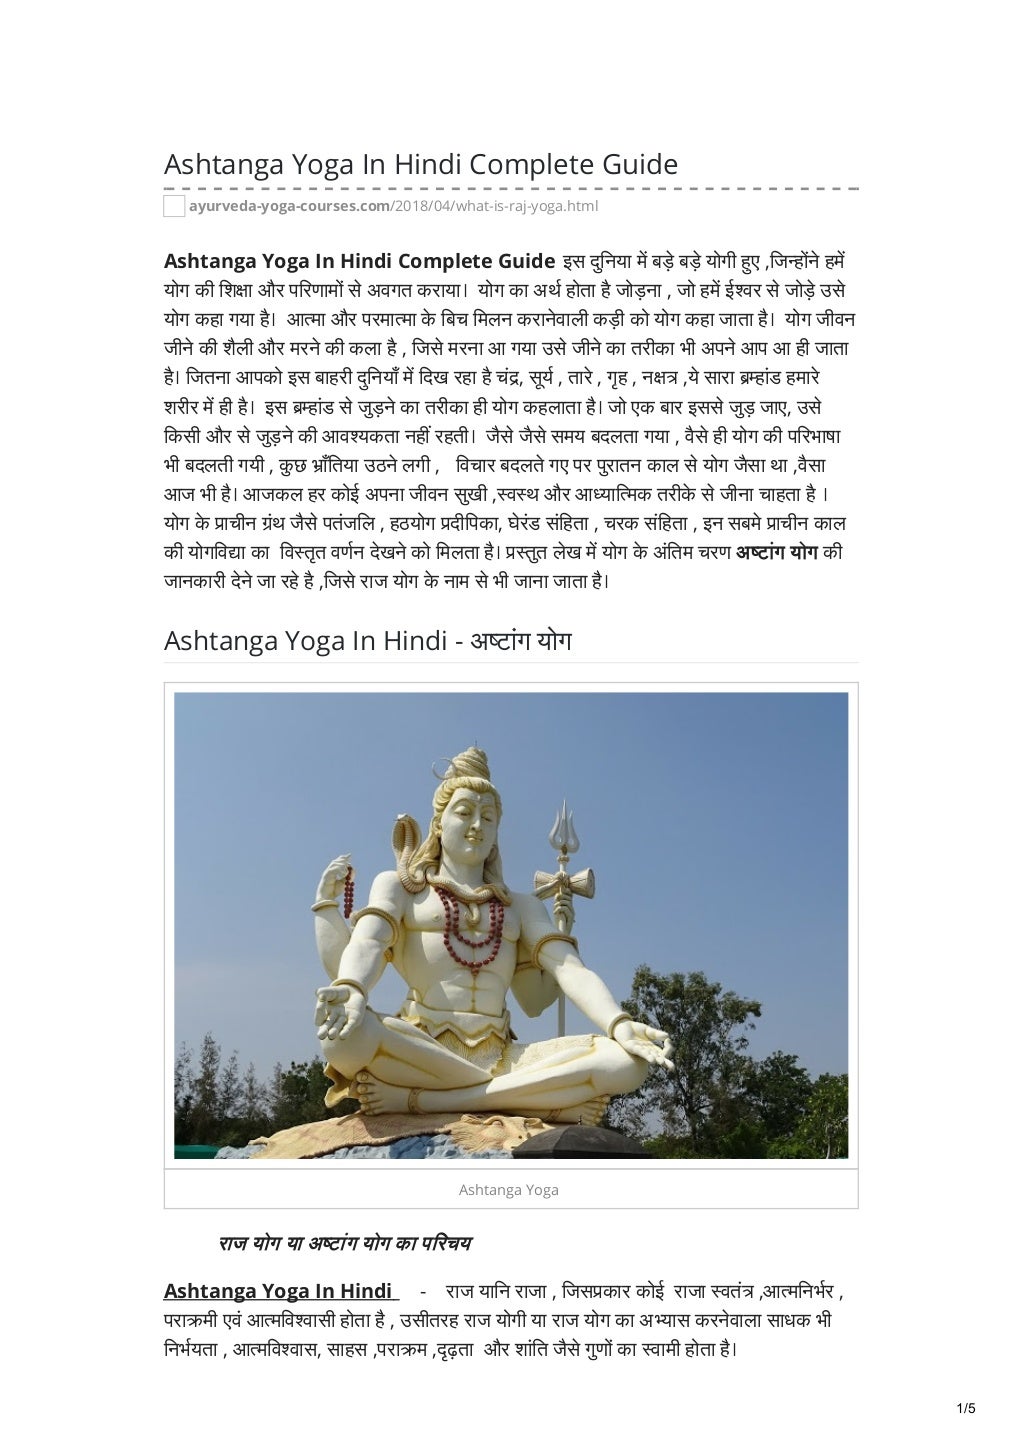 Ashtanga yoga in hindi complete guide